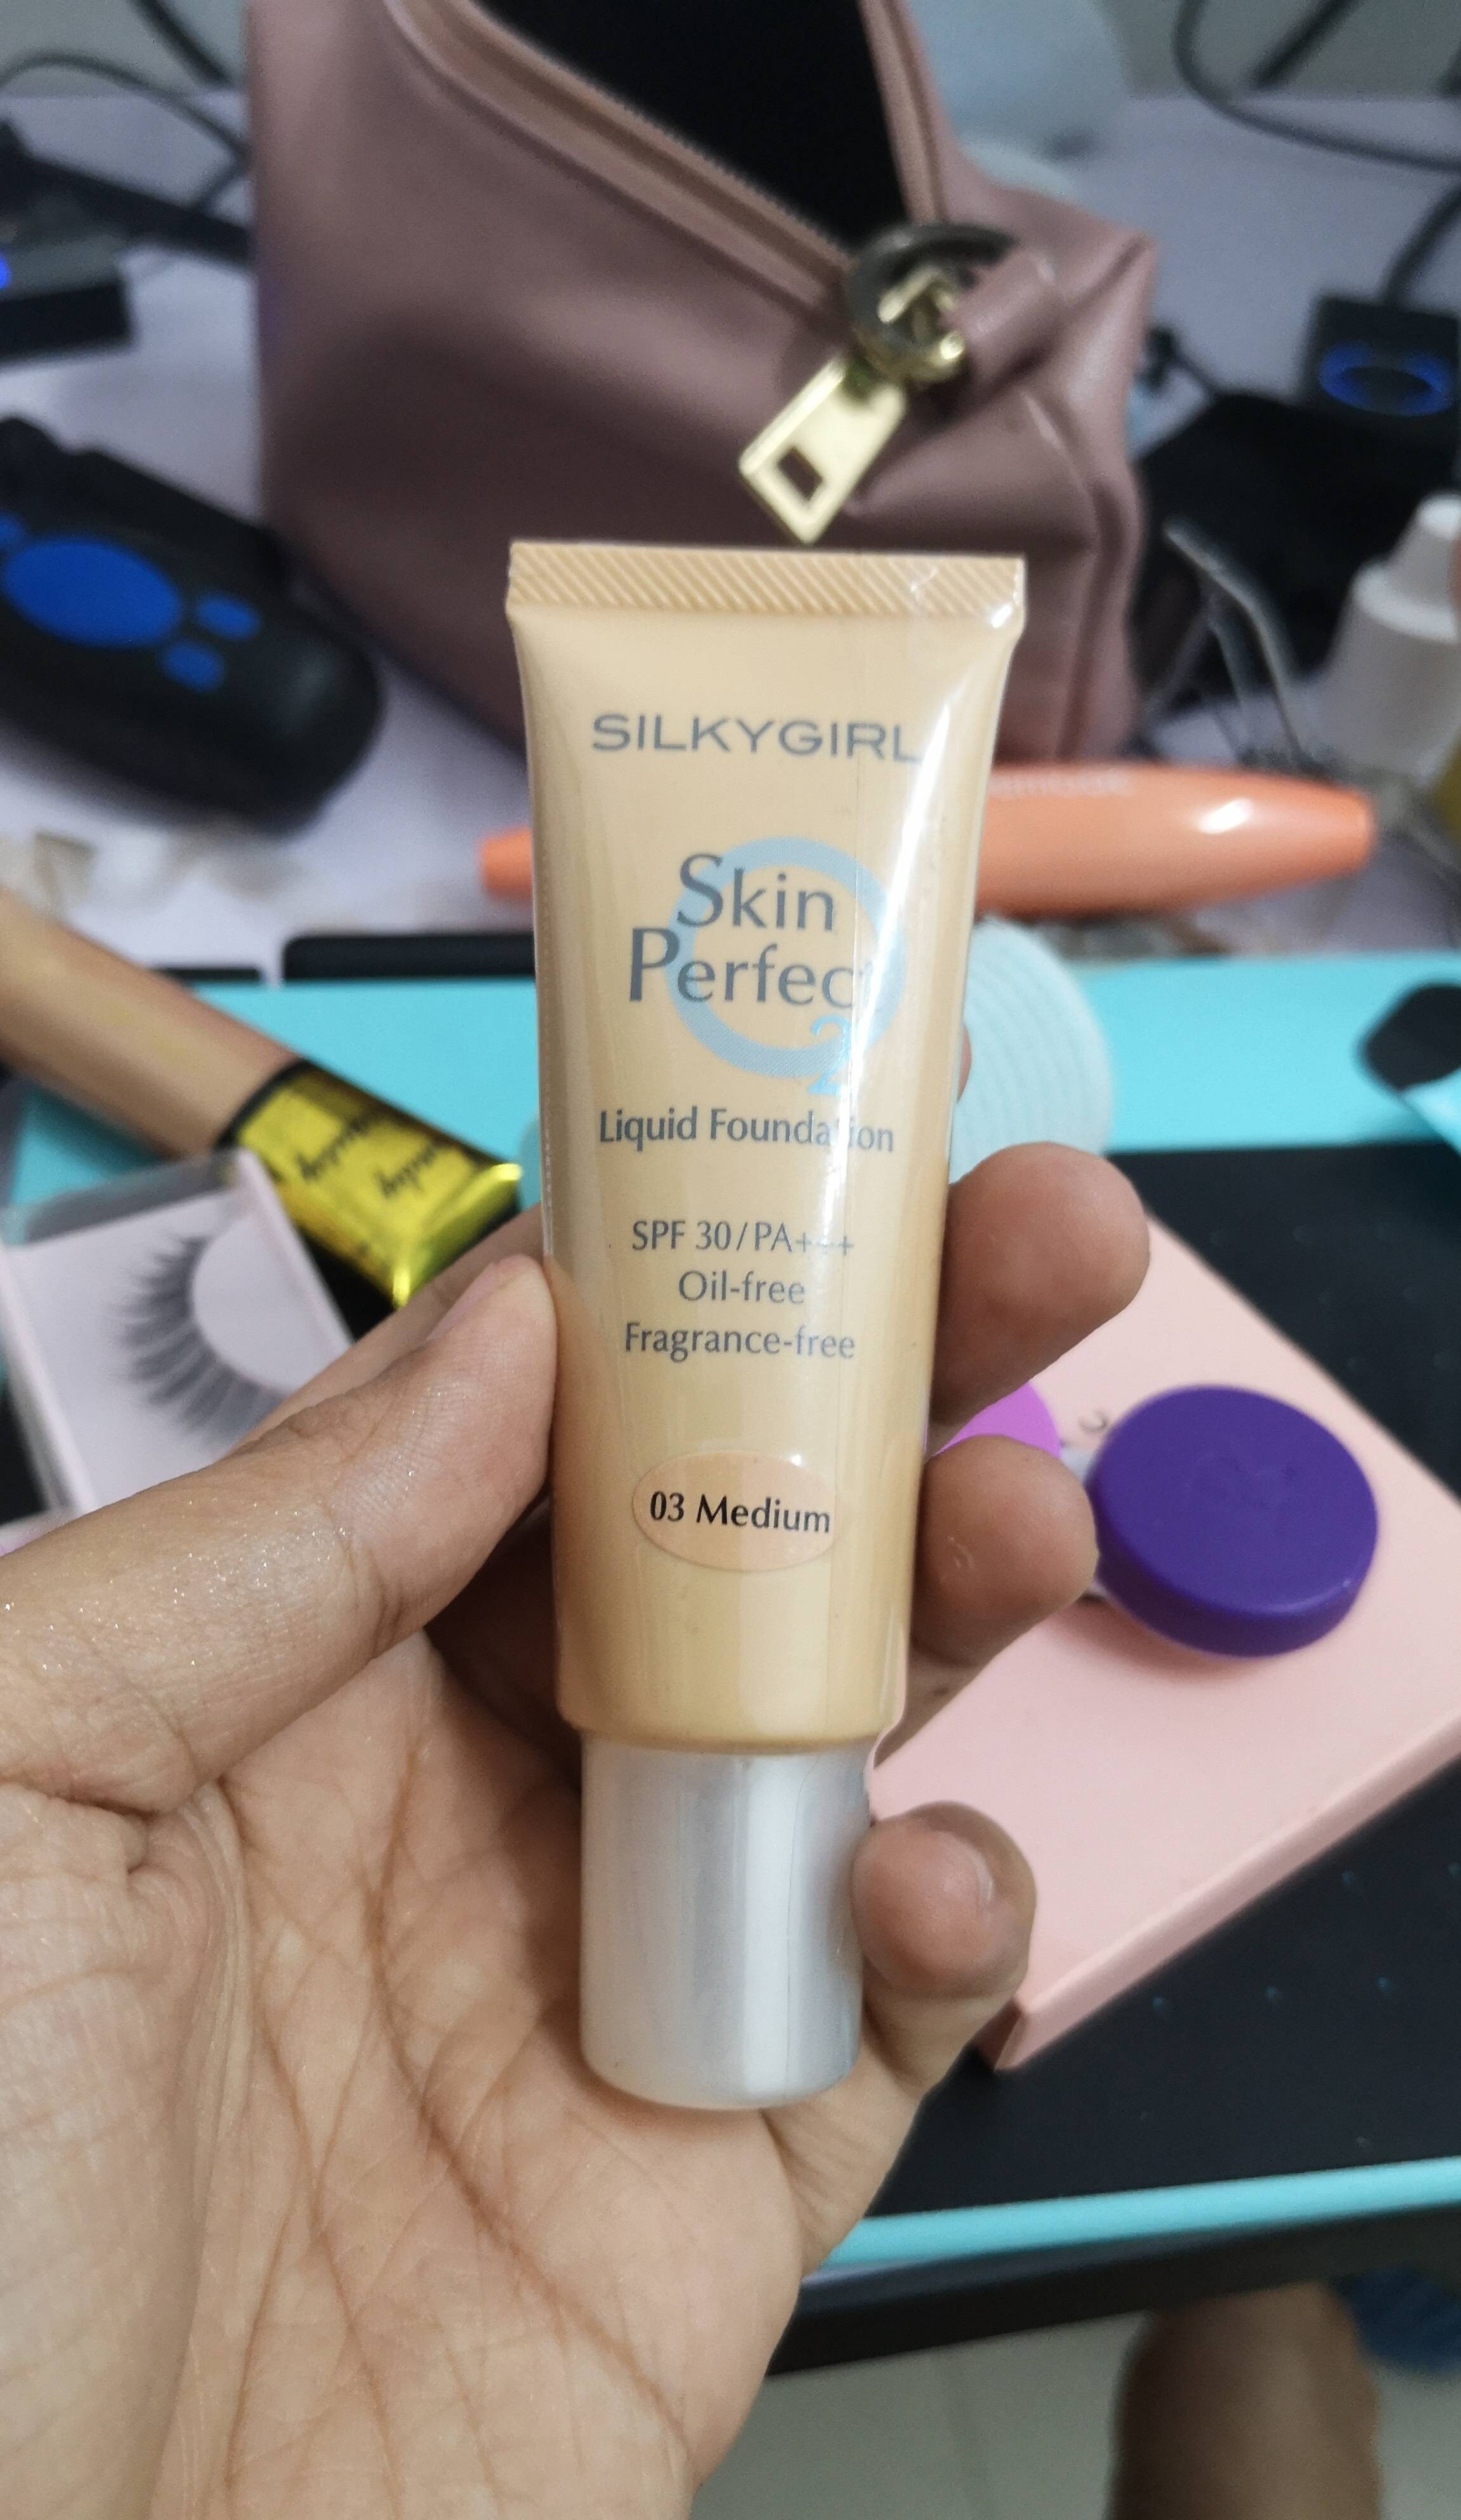 Silkygirl Skin Perfect Liquid Foundation - Produkt - en